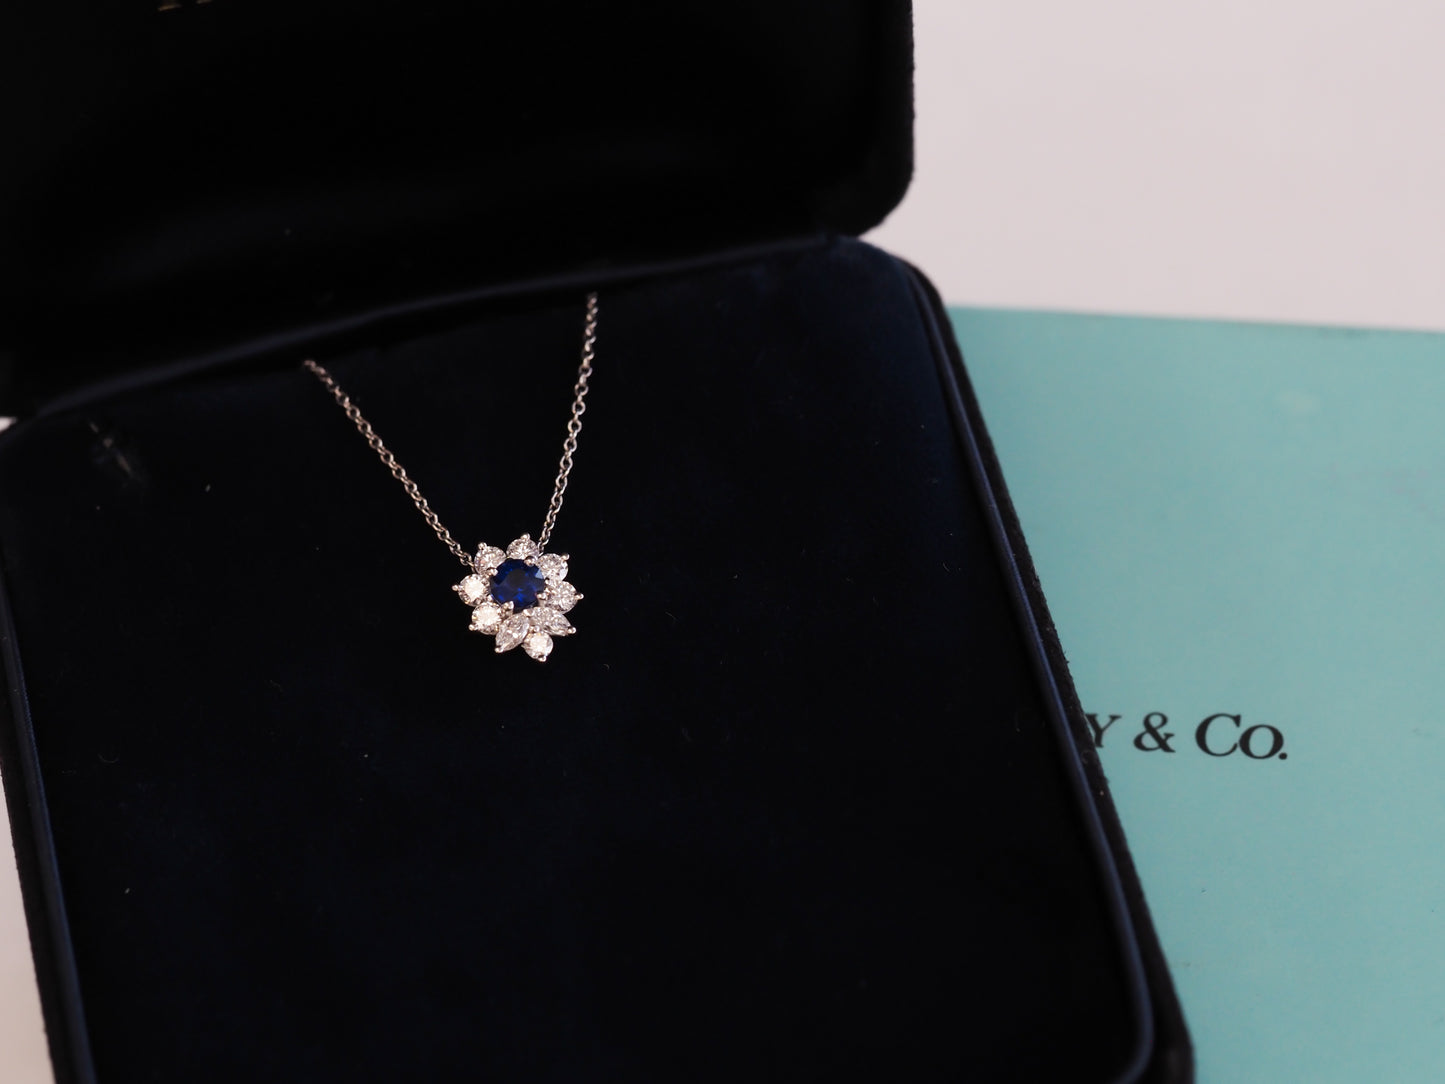 Tiffany & Co Platinum Victoria Diamond and Sapphire Pendant